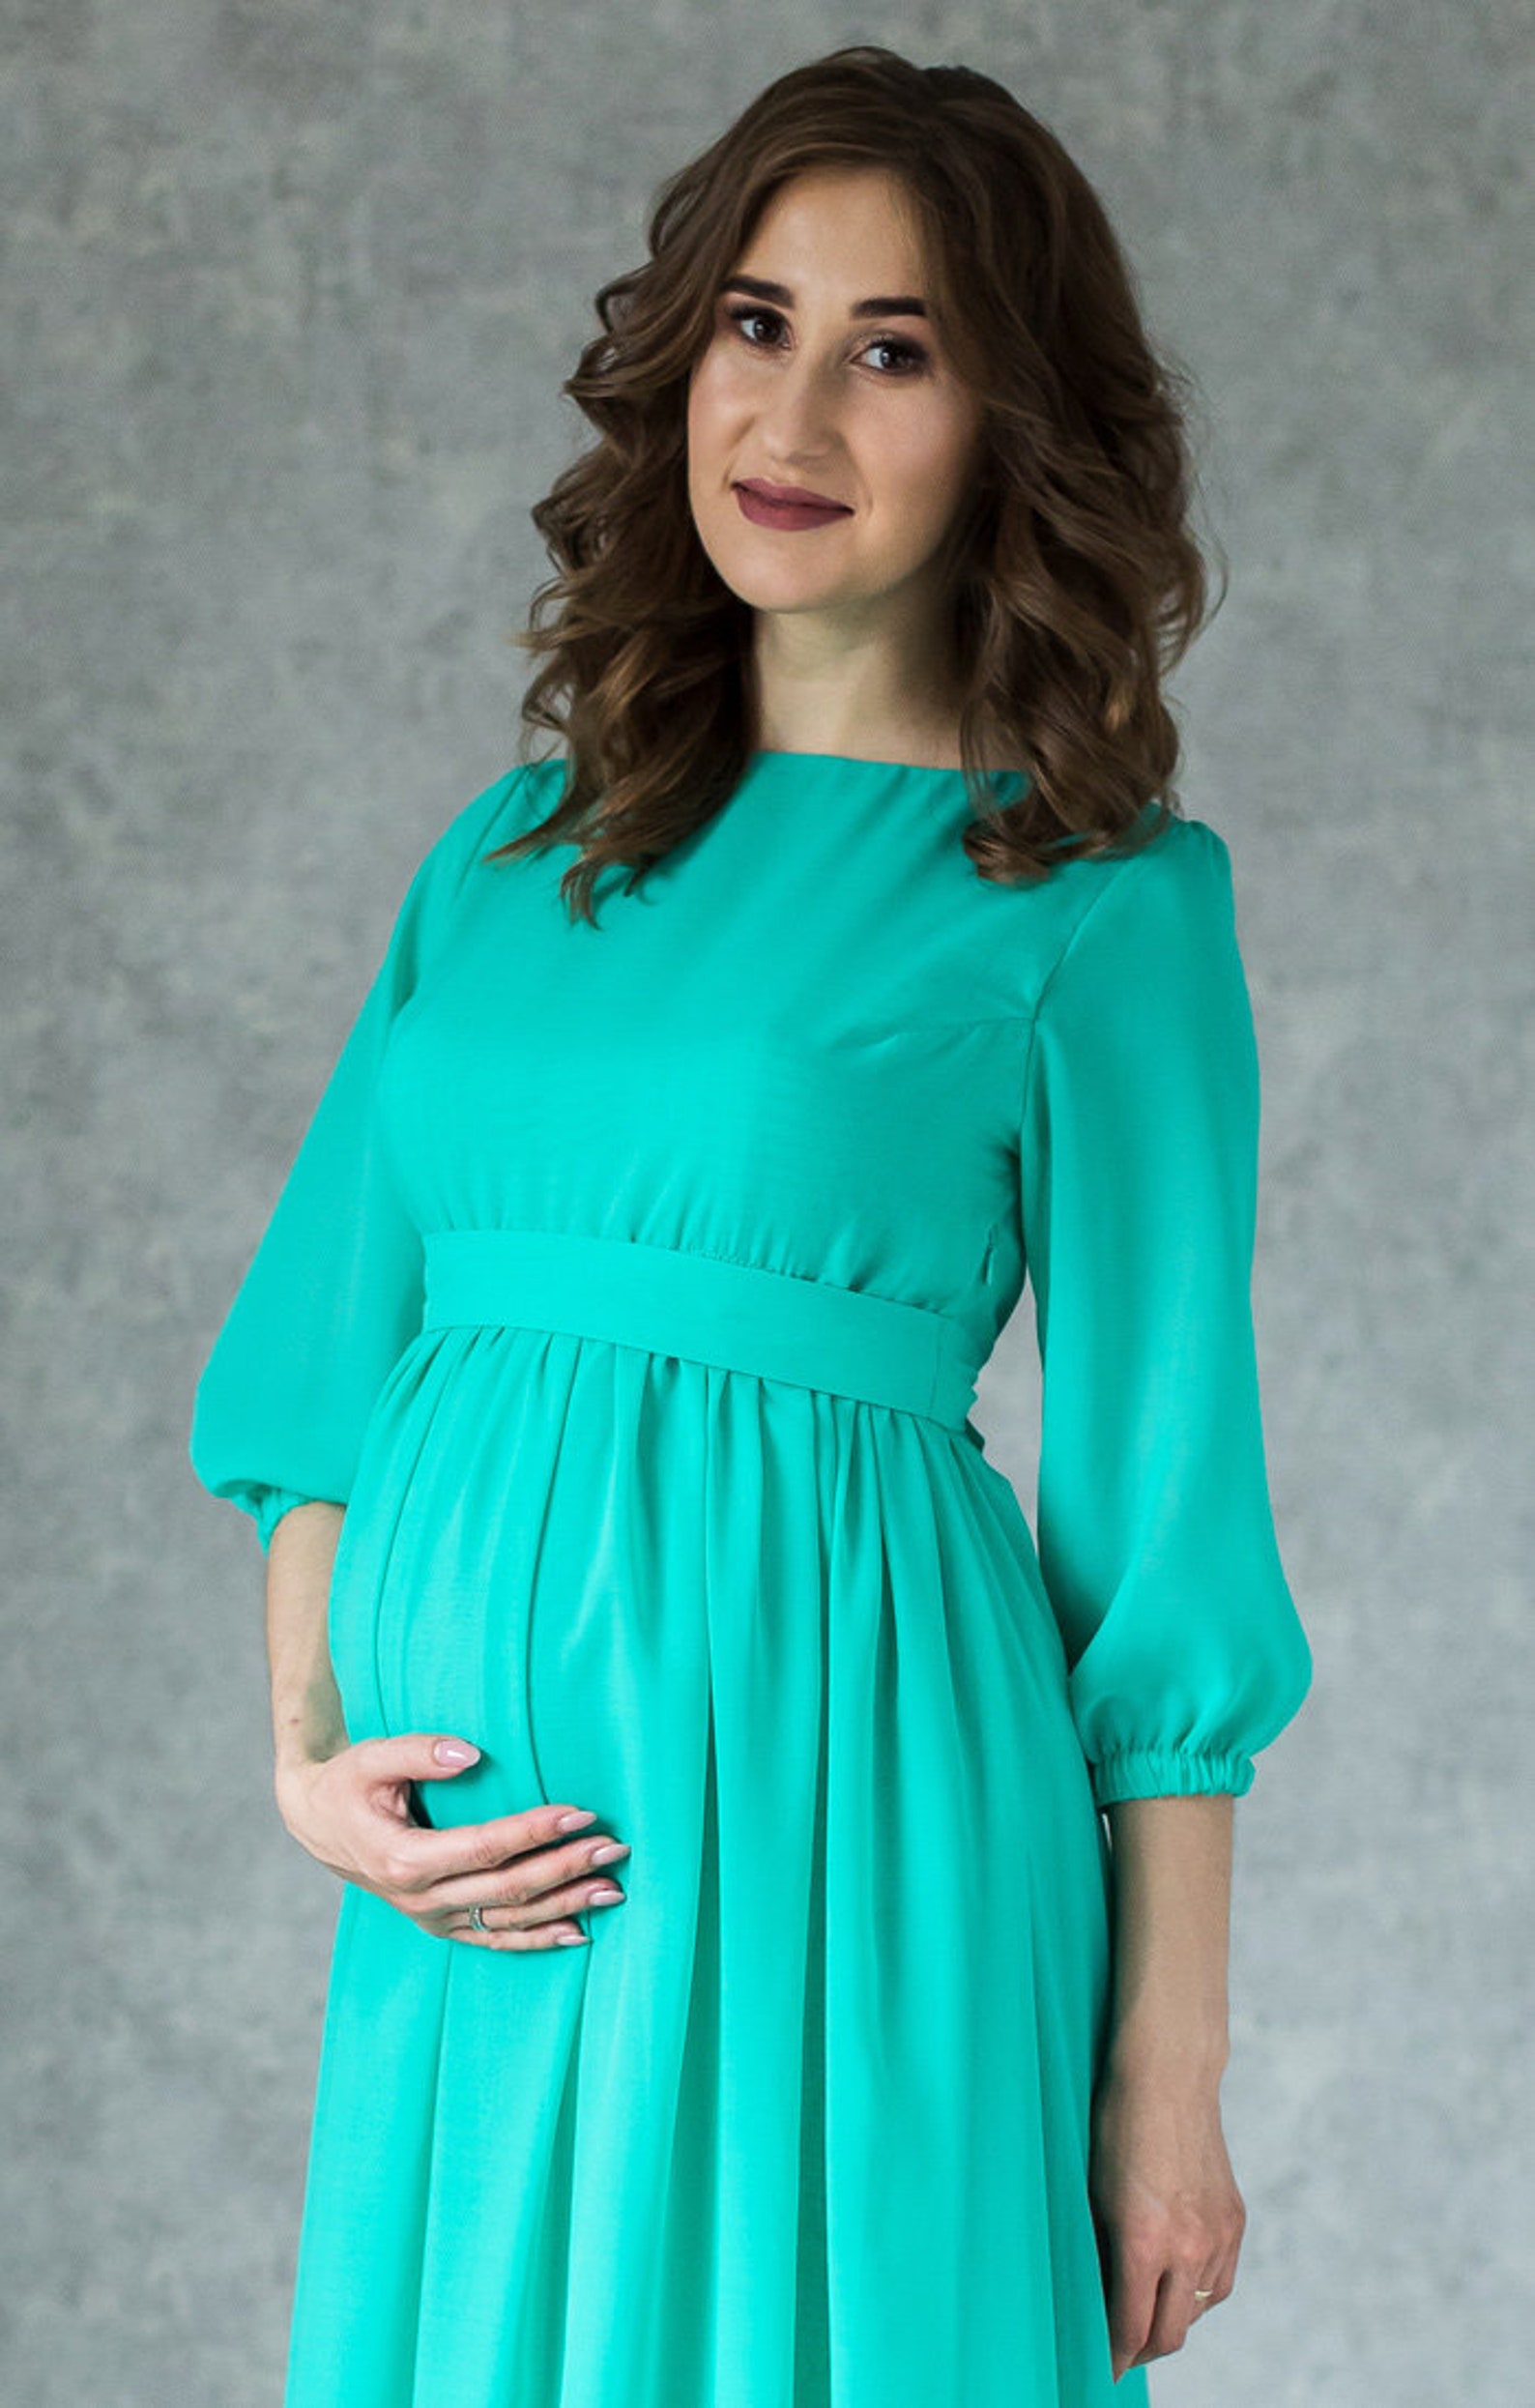 Elegance Emerald Maternity Dress / Long Green Formal Dress for | Etsy